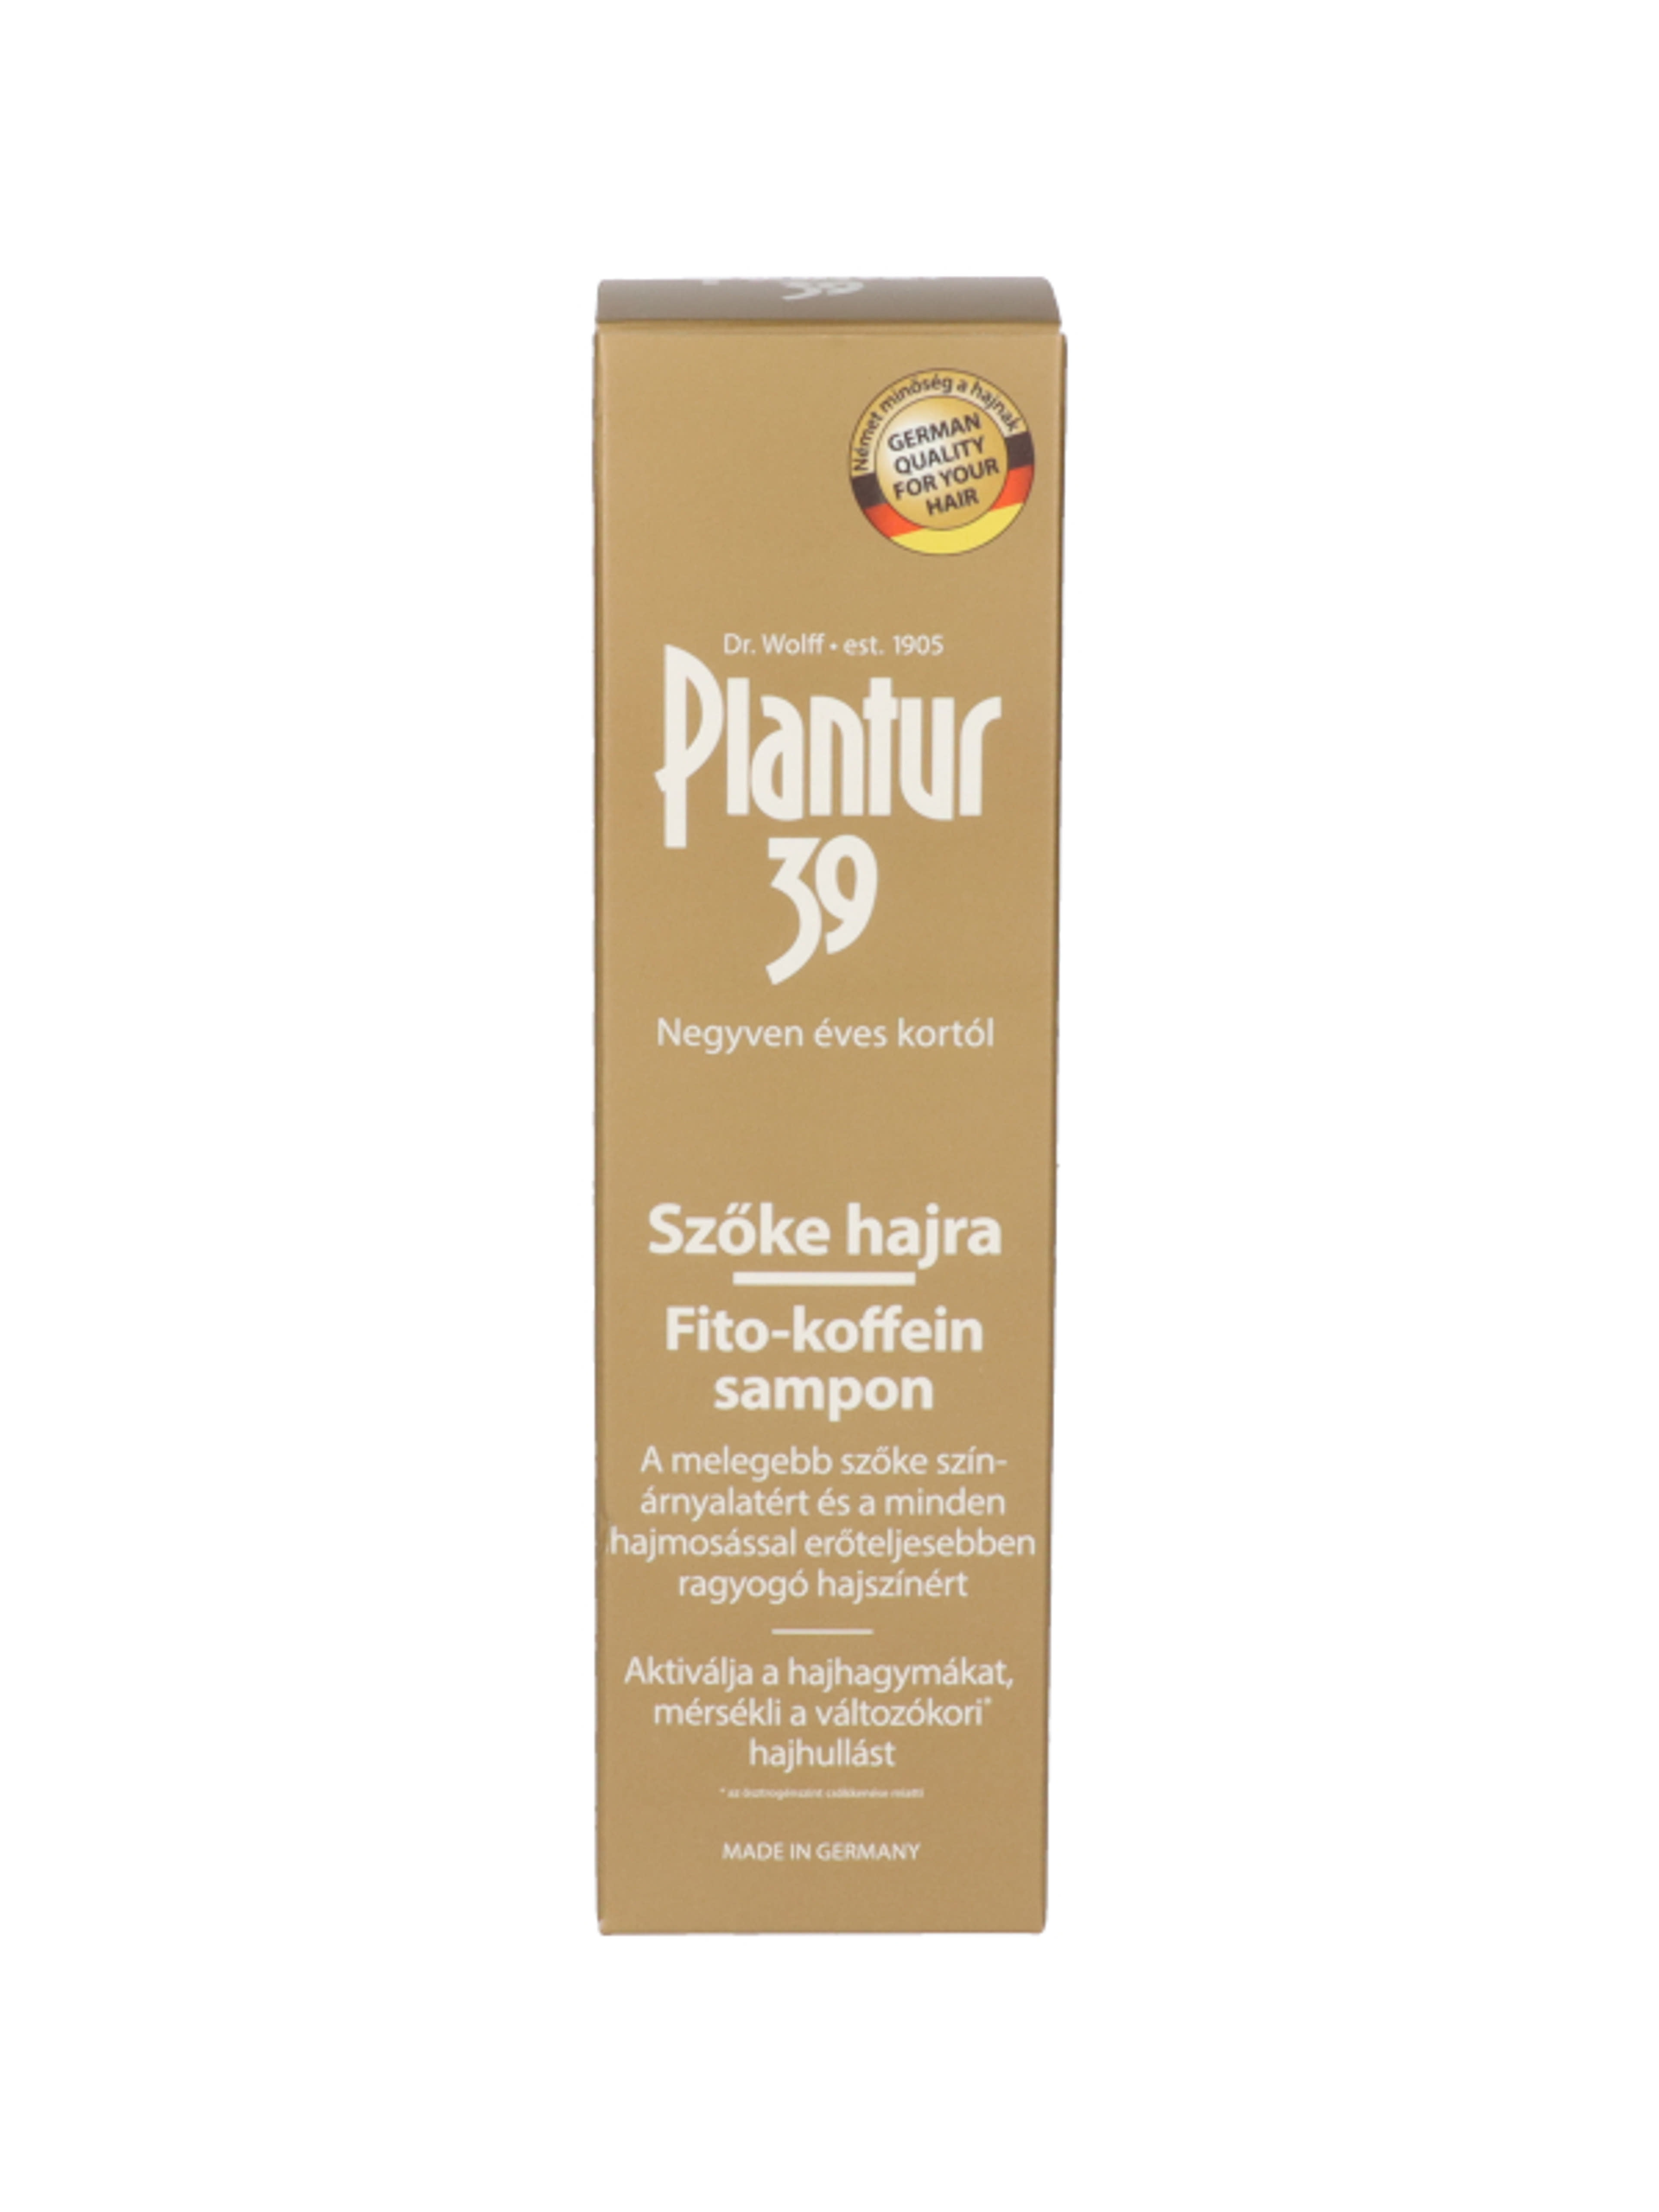 Plantur 39 fito-koffein sampon szőke hajra - 250 ml-5